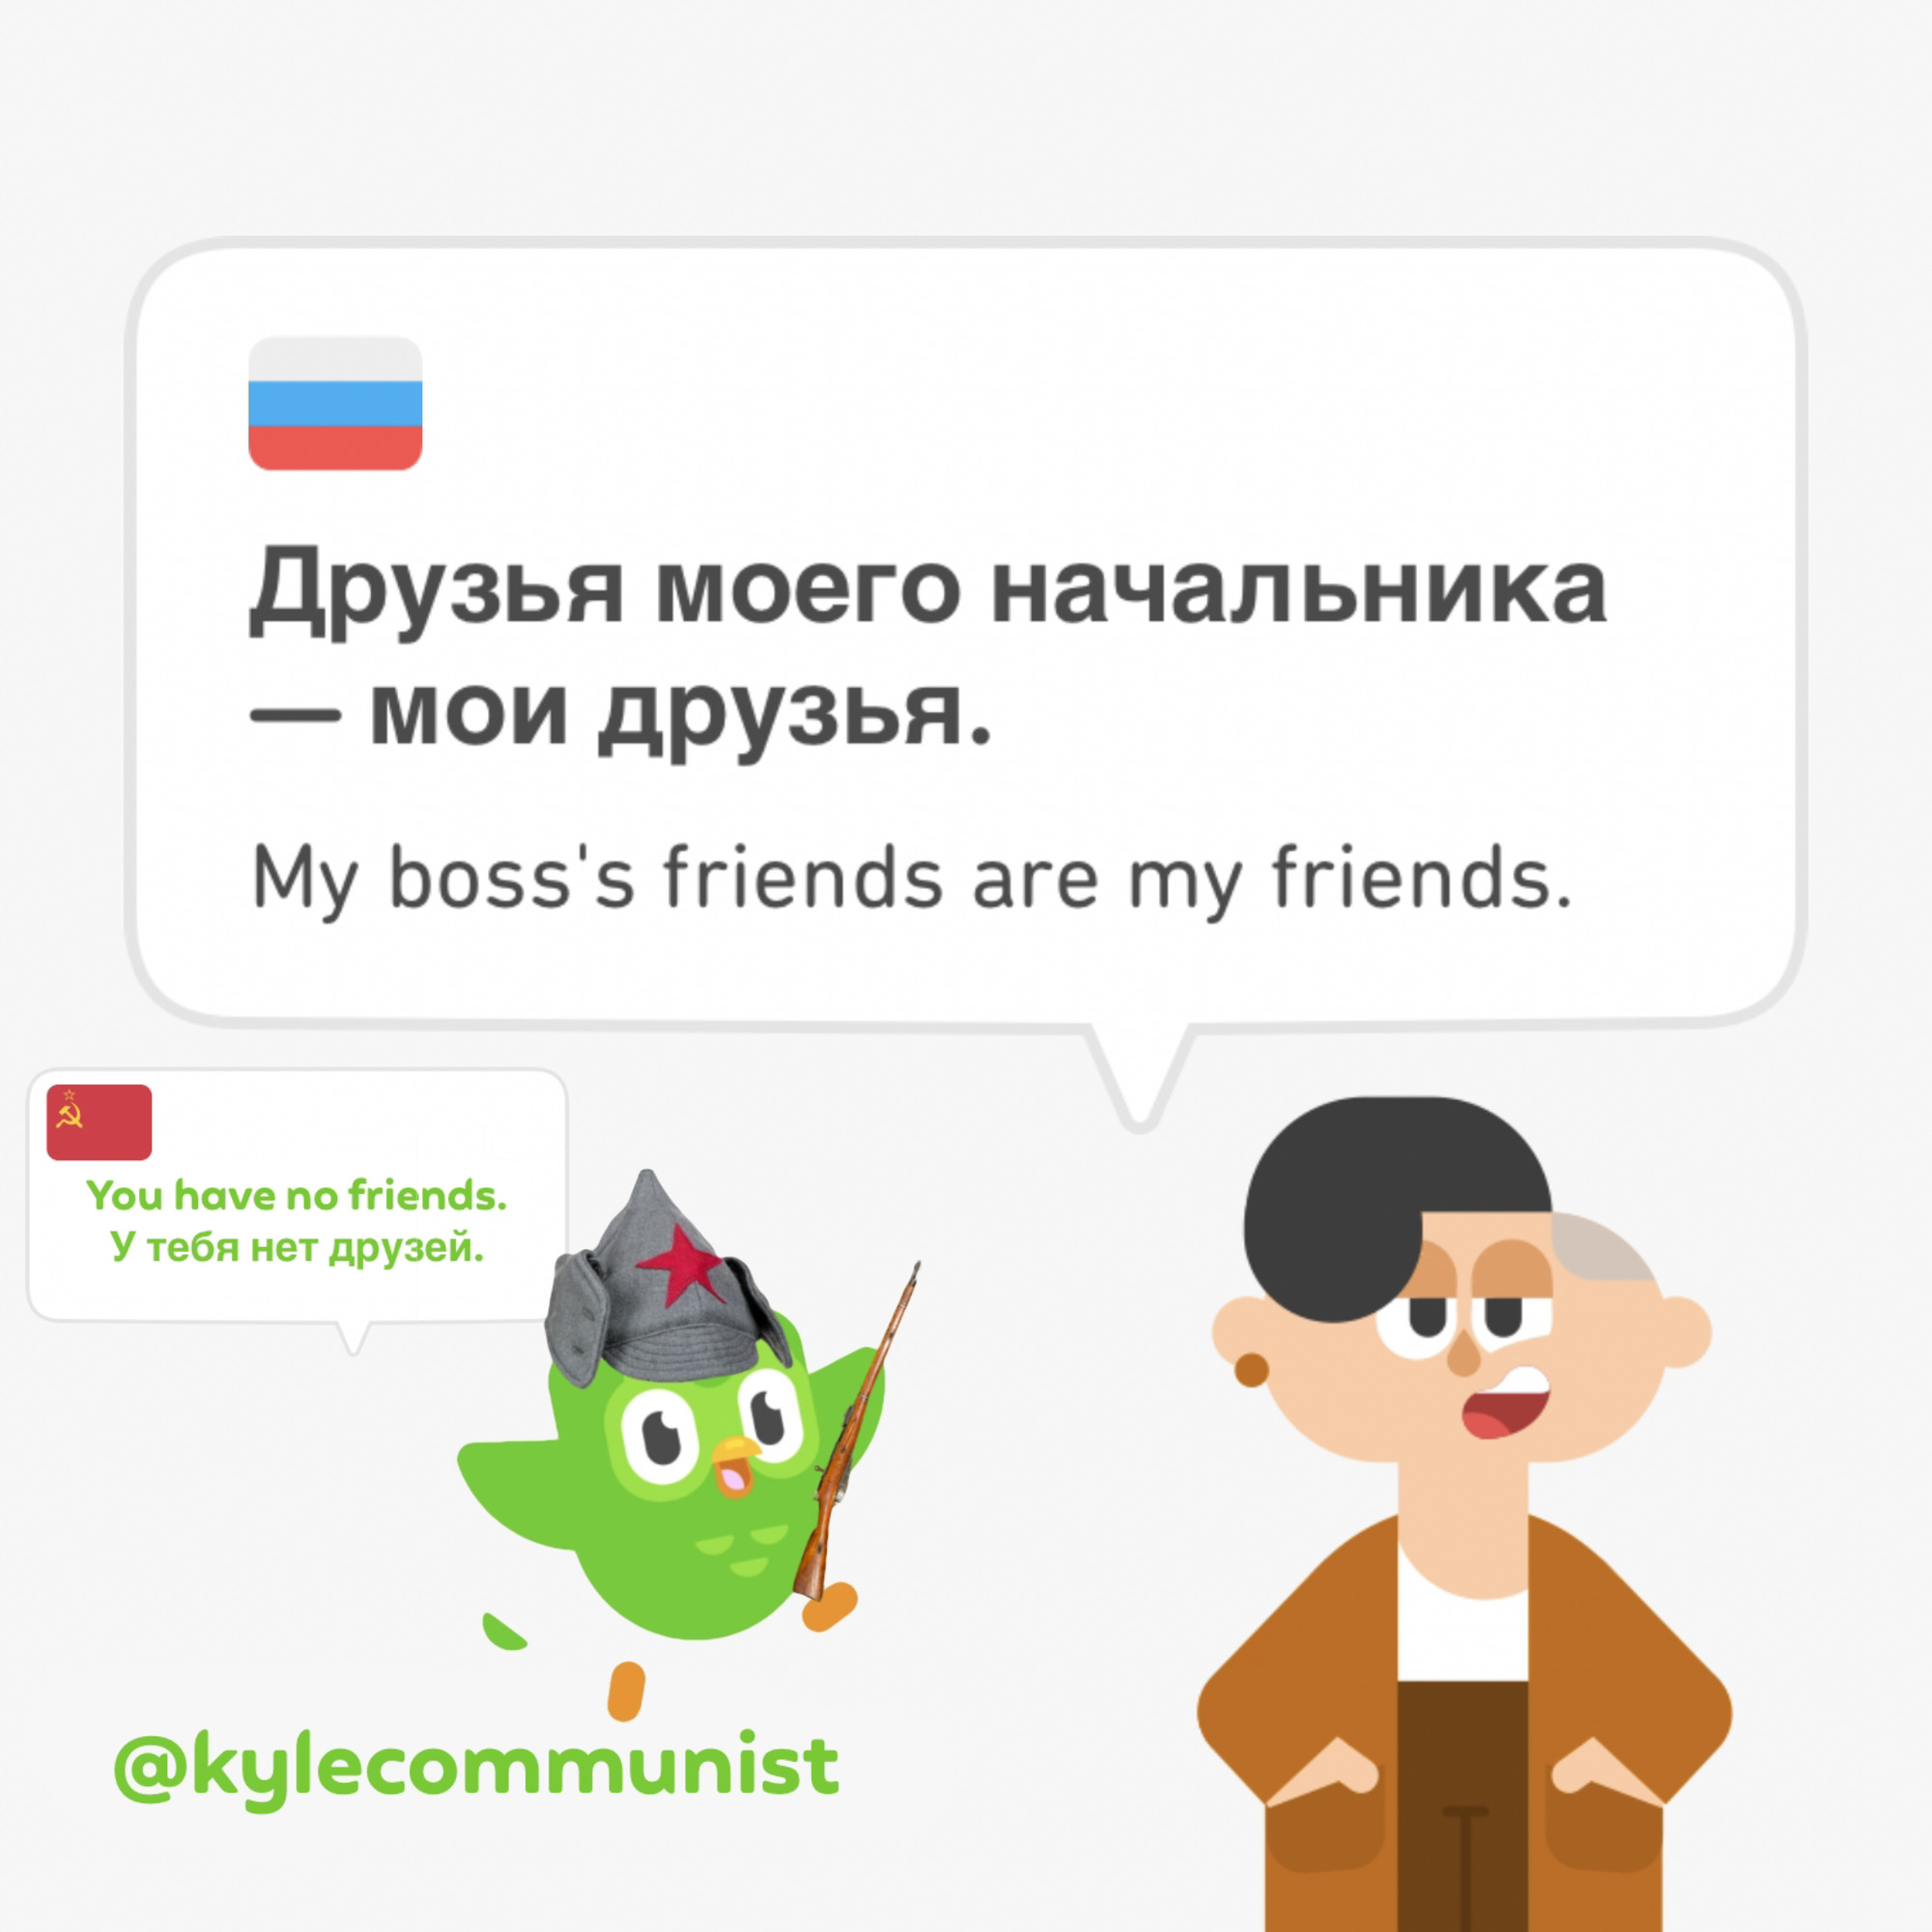 “My boss’s friends are my friends”